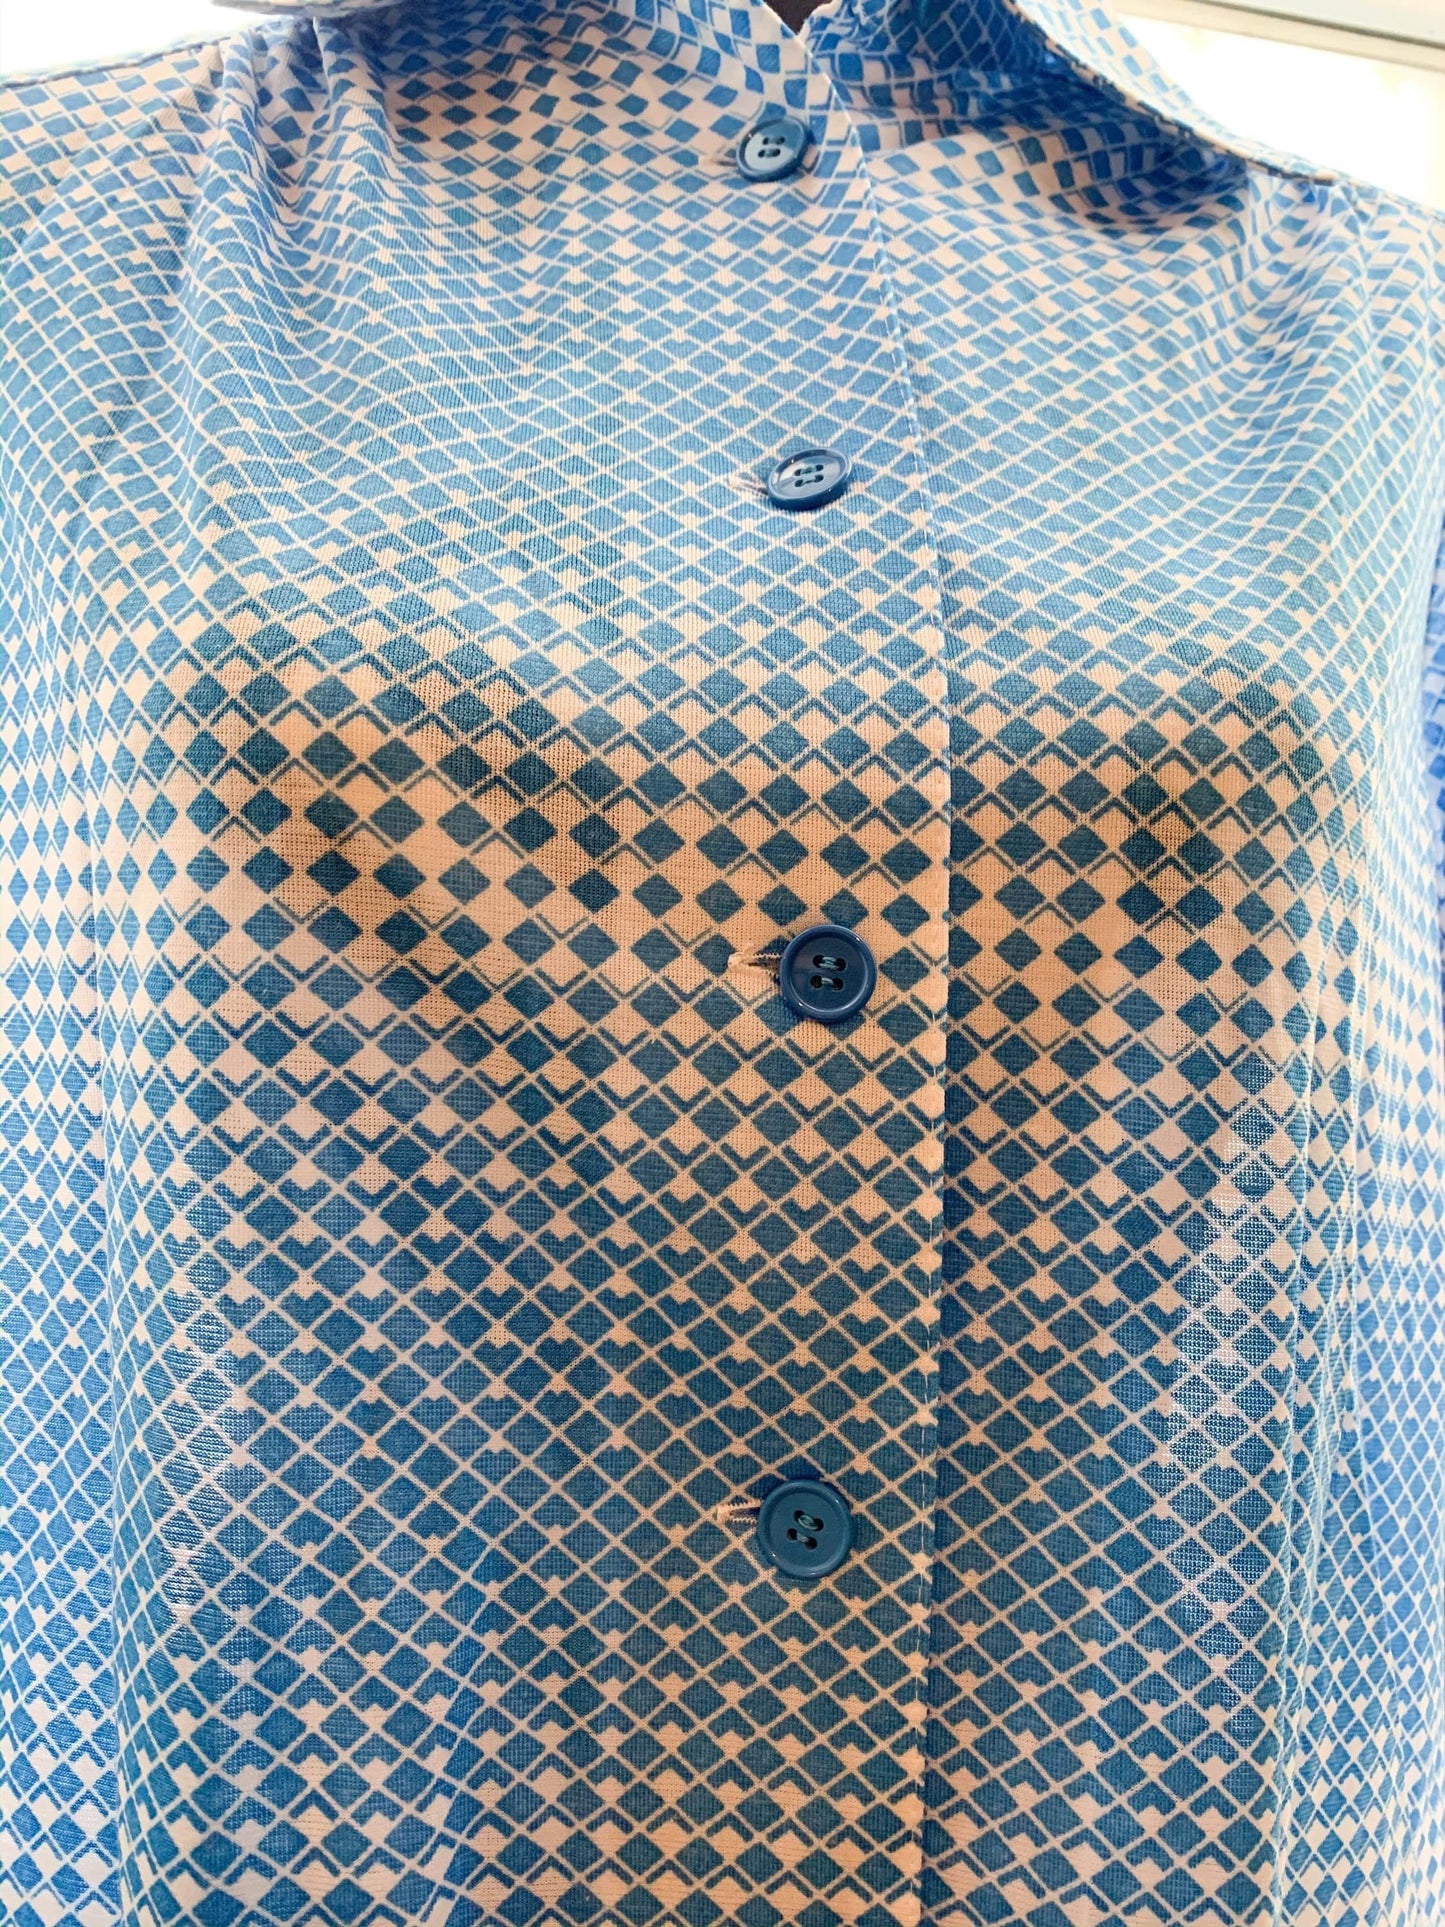 70s Blouse Shirt Vintage 70s Japanese short sleeve blue stripe short sleeve pattern blouse western shirt dagger collars